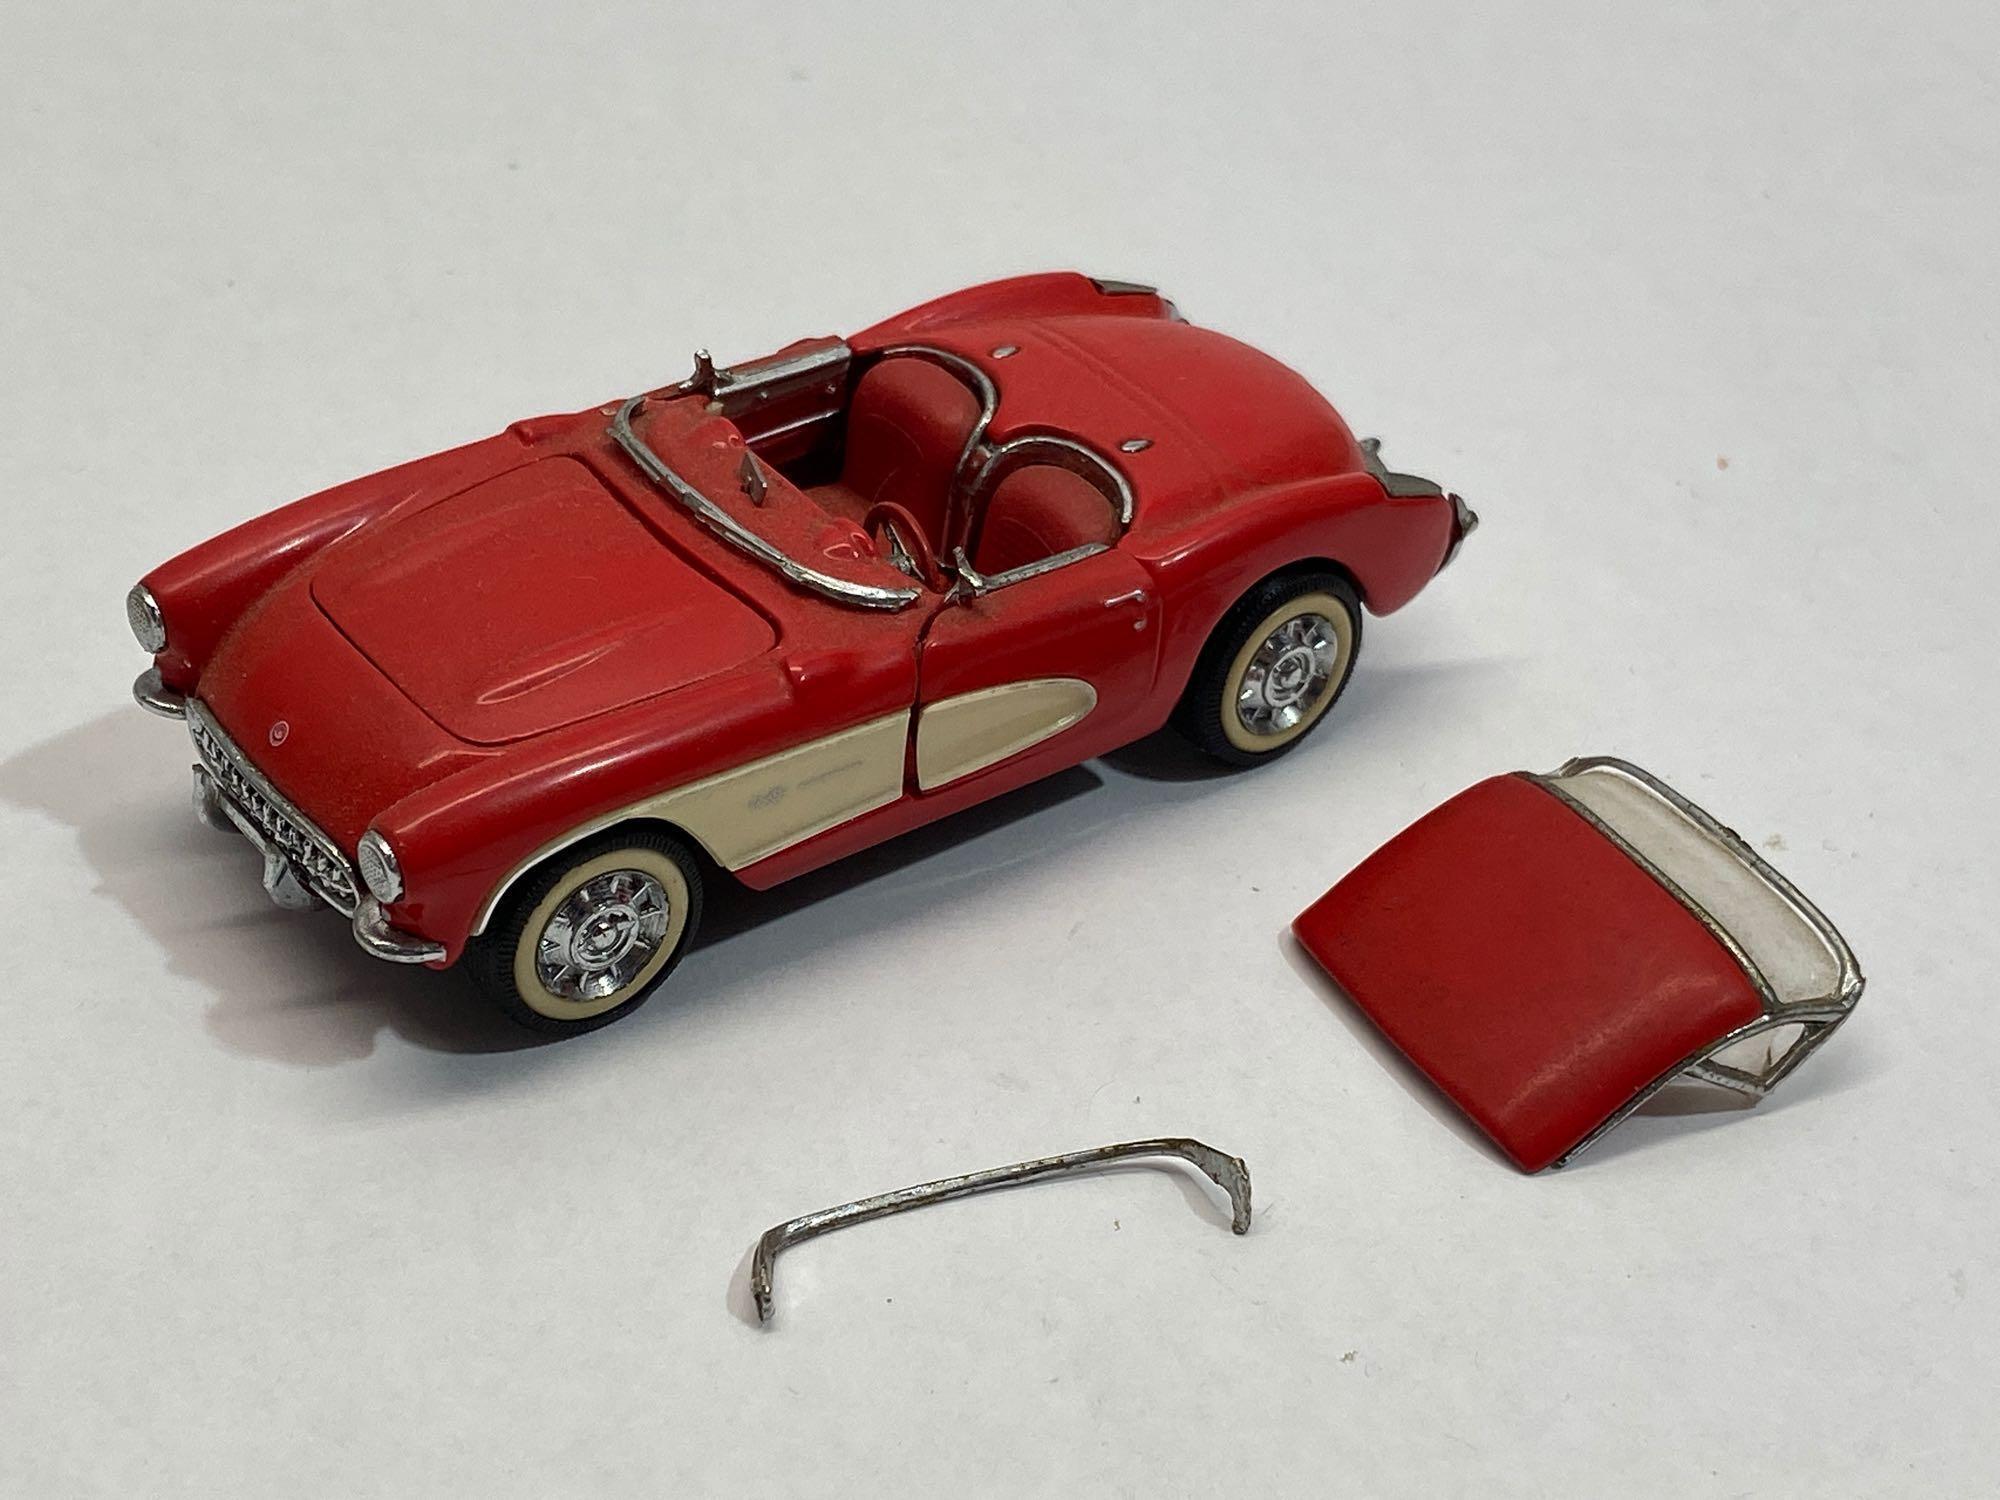 1987 Franklin Mint Precision Models Diecast Metal Toy Cars, set of 12